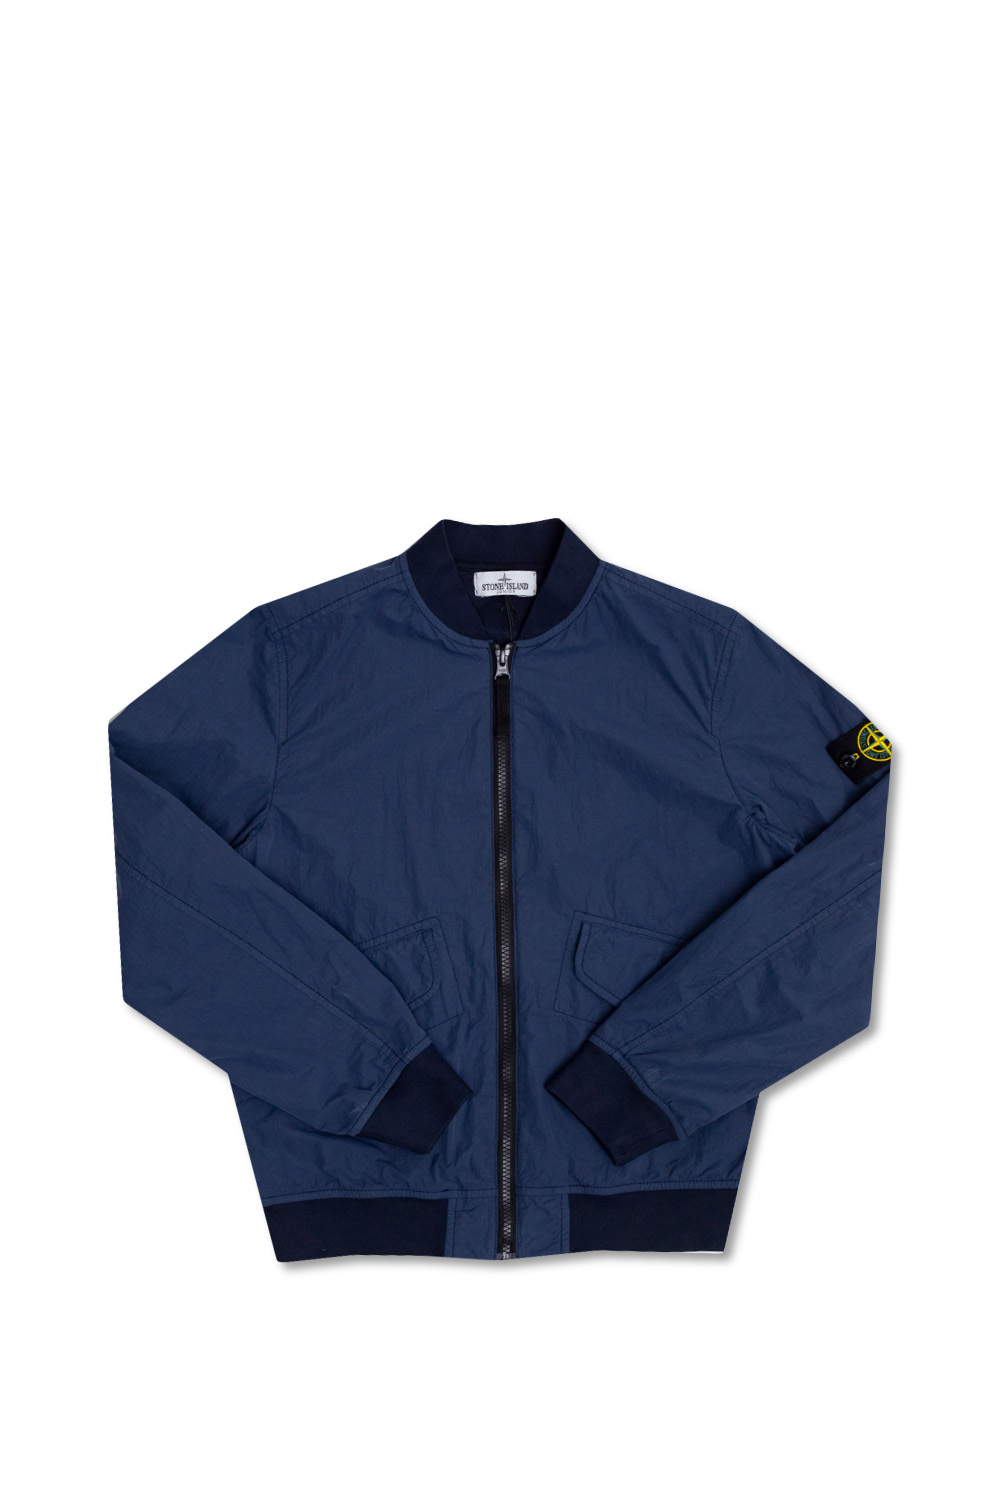 Ralph Lauren Autres pull-overs & sweat-shirts Bomber jacket